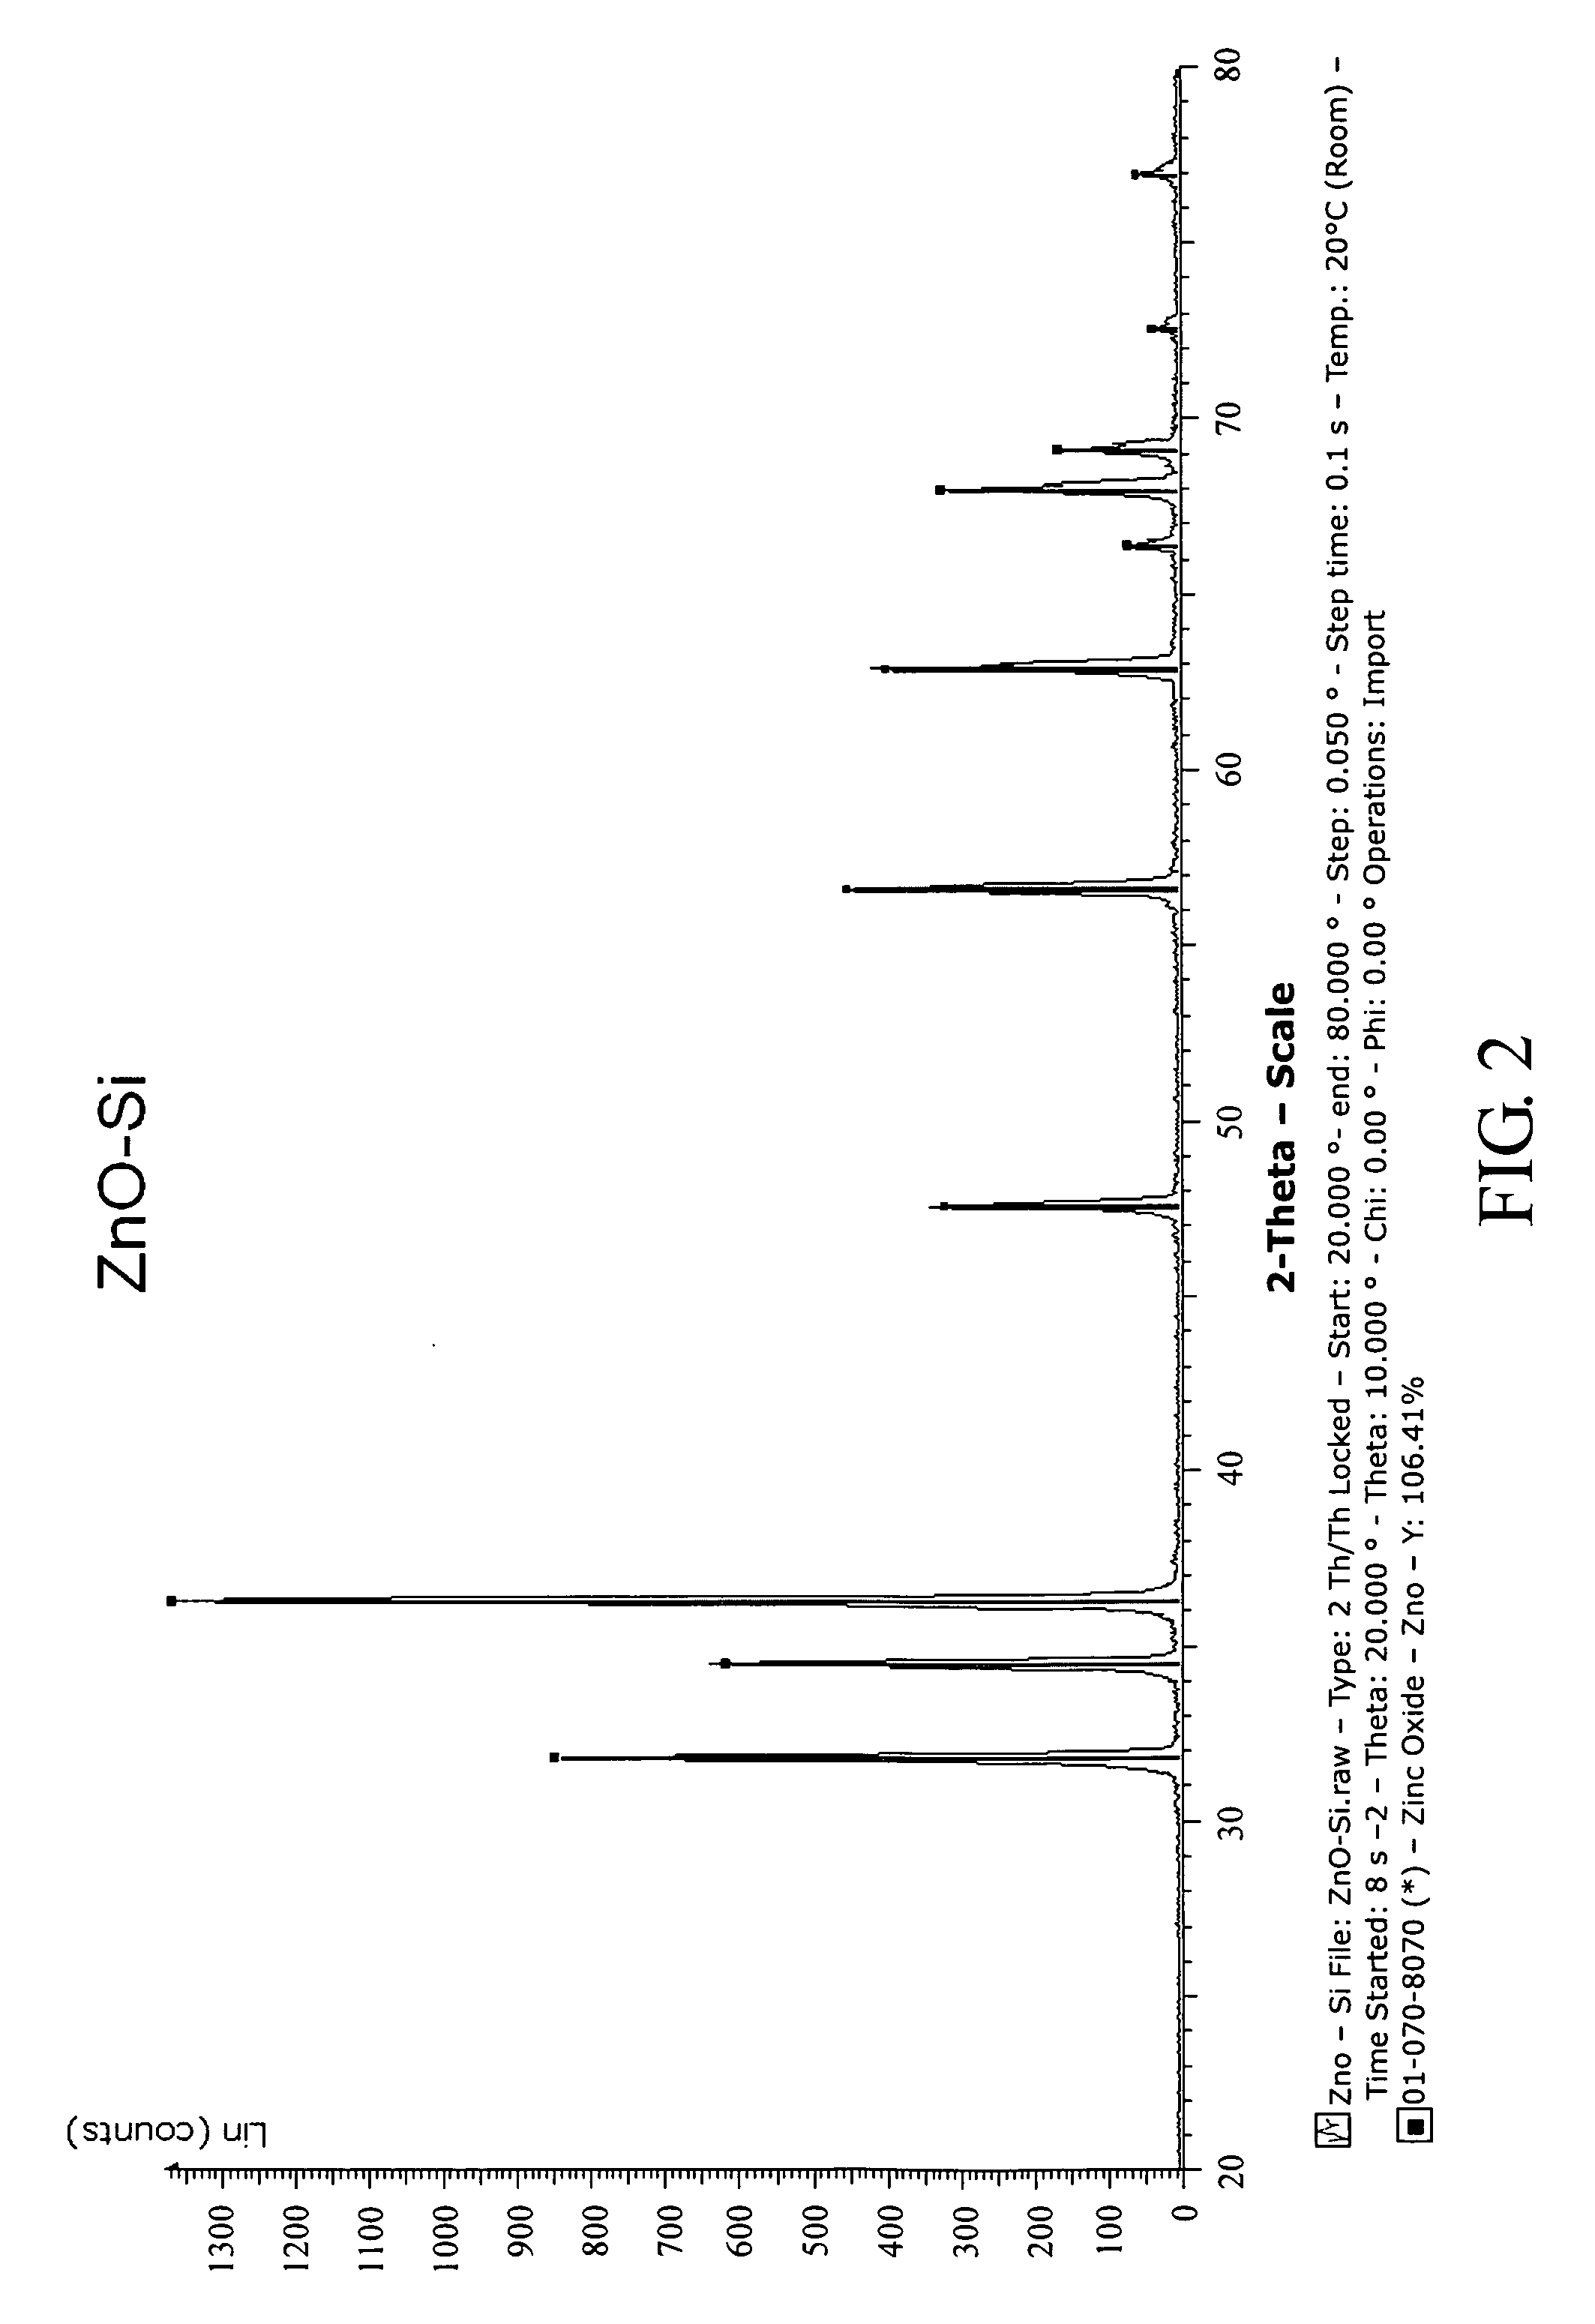 Process for producing zinc oxide varistor